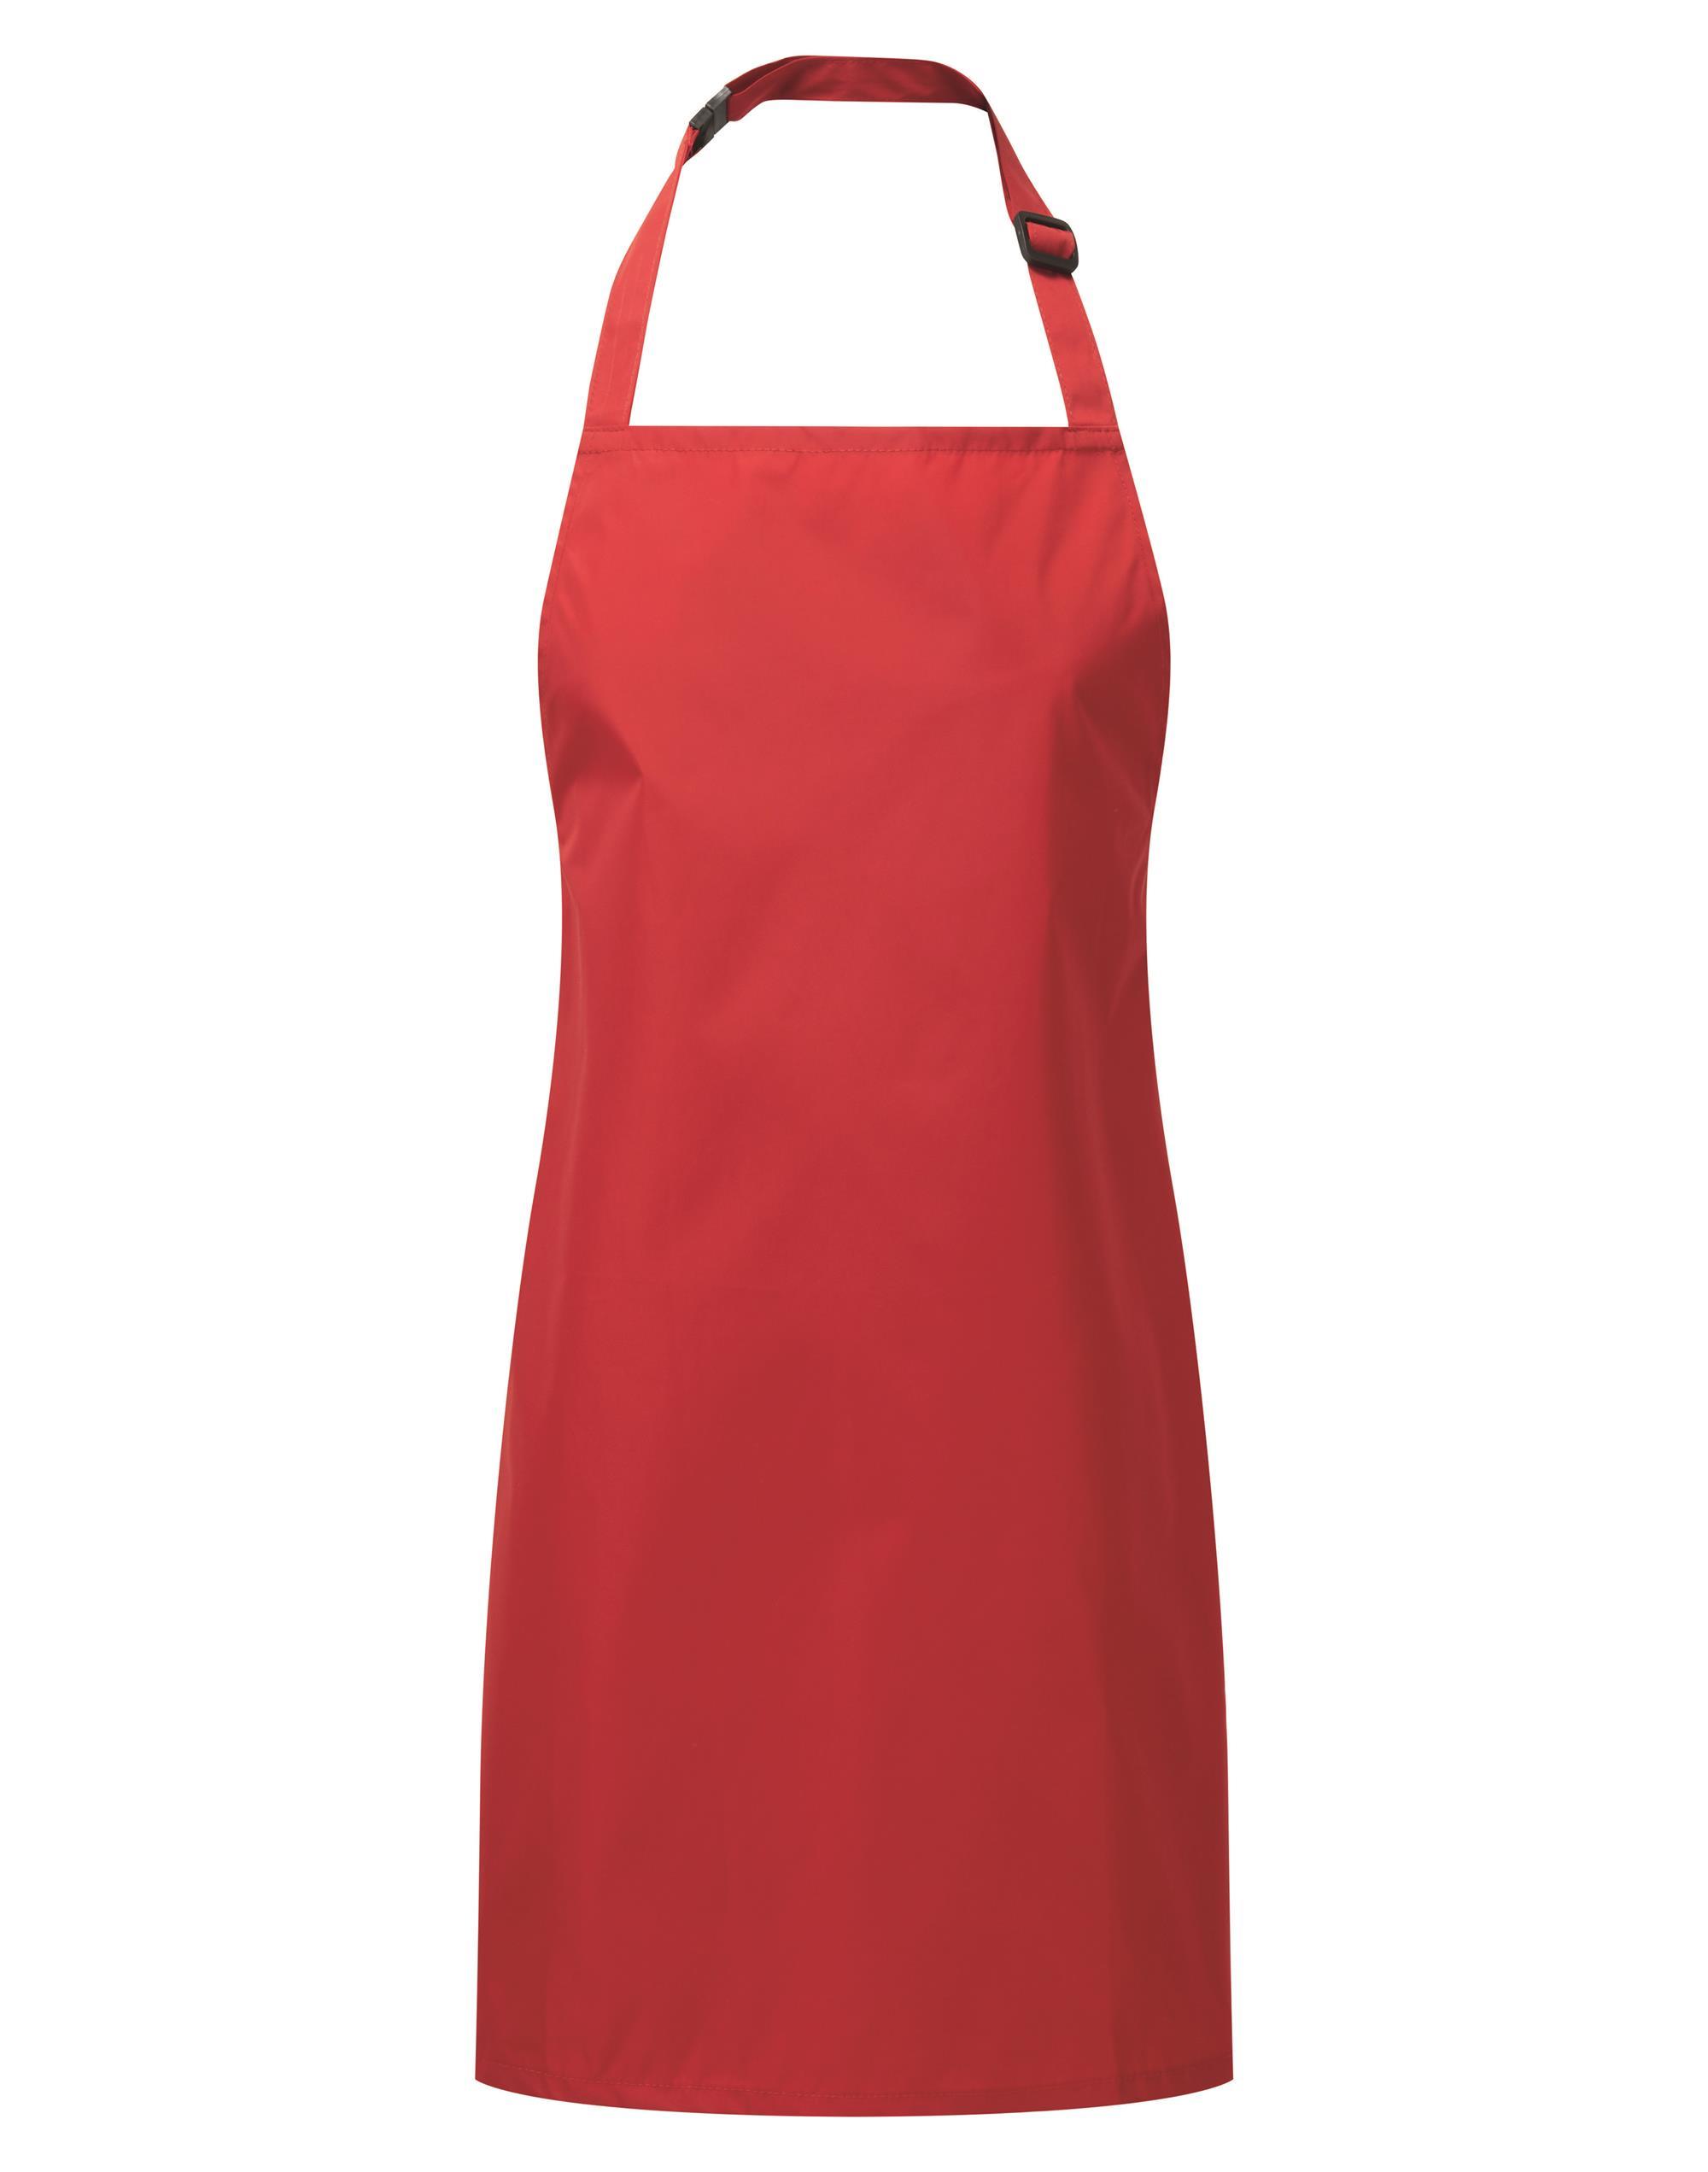 Waterproof children's apron 110 g/m² Premier® Red 3-6 years/ W x L 43 x 53 cm